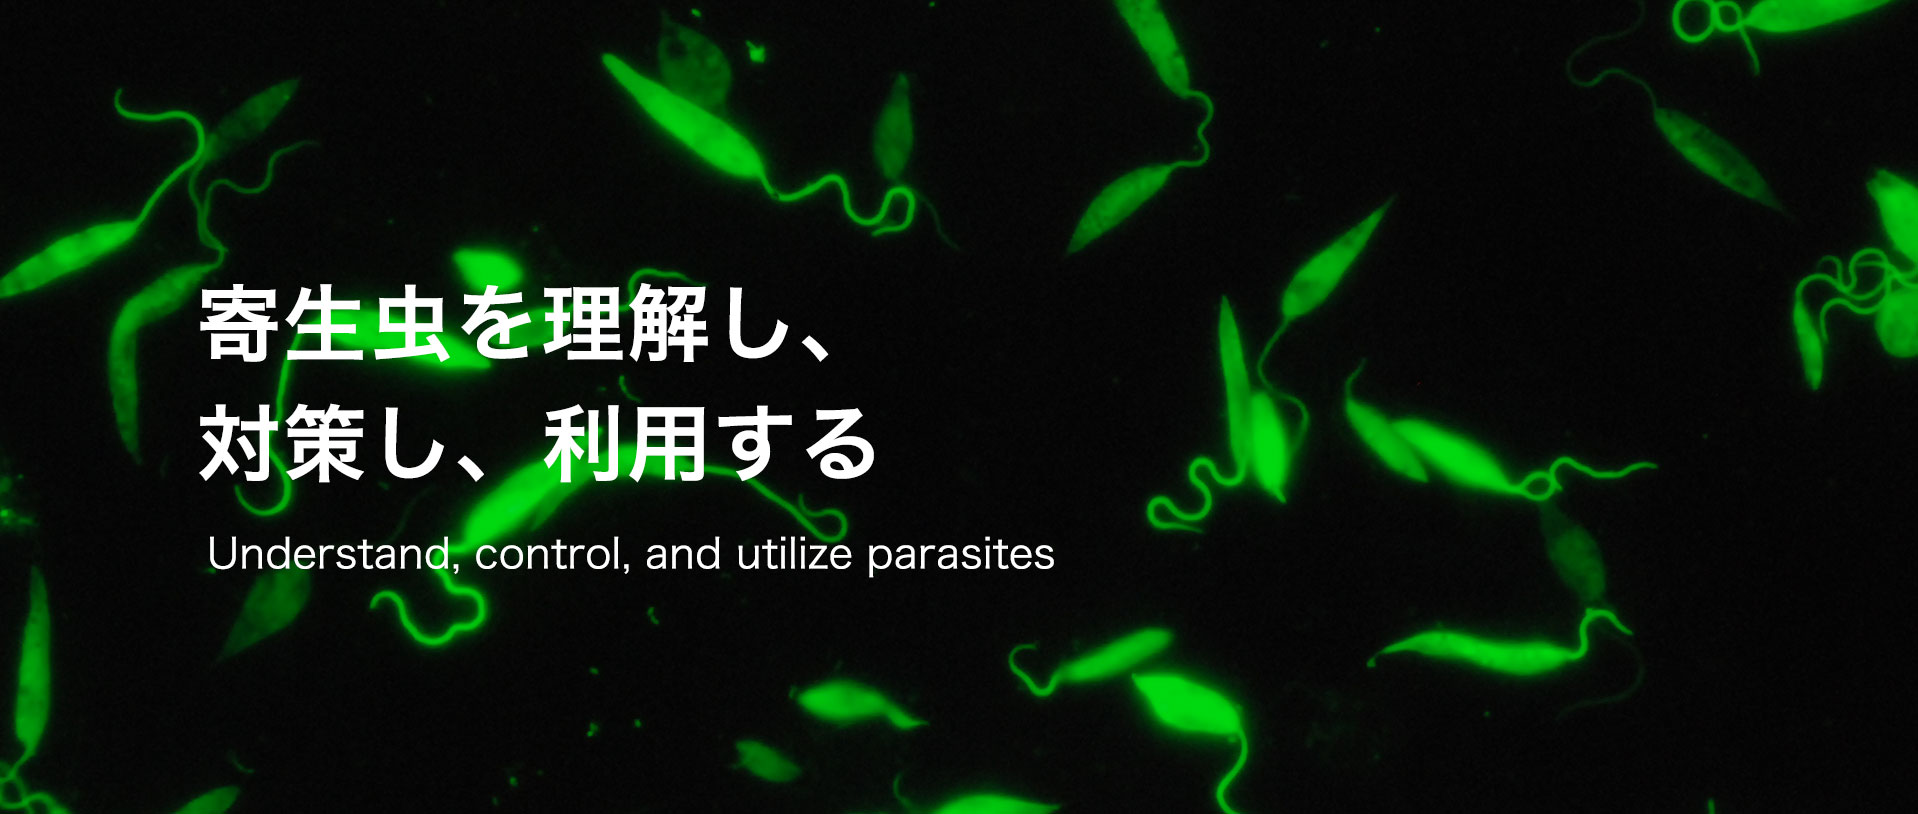 Understand, control, and utilize parasites